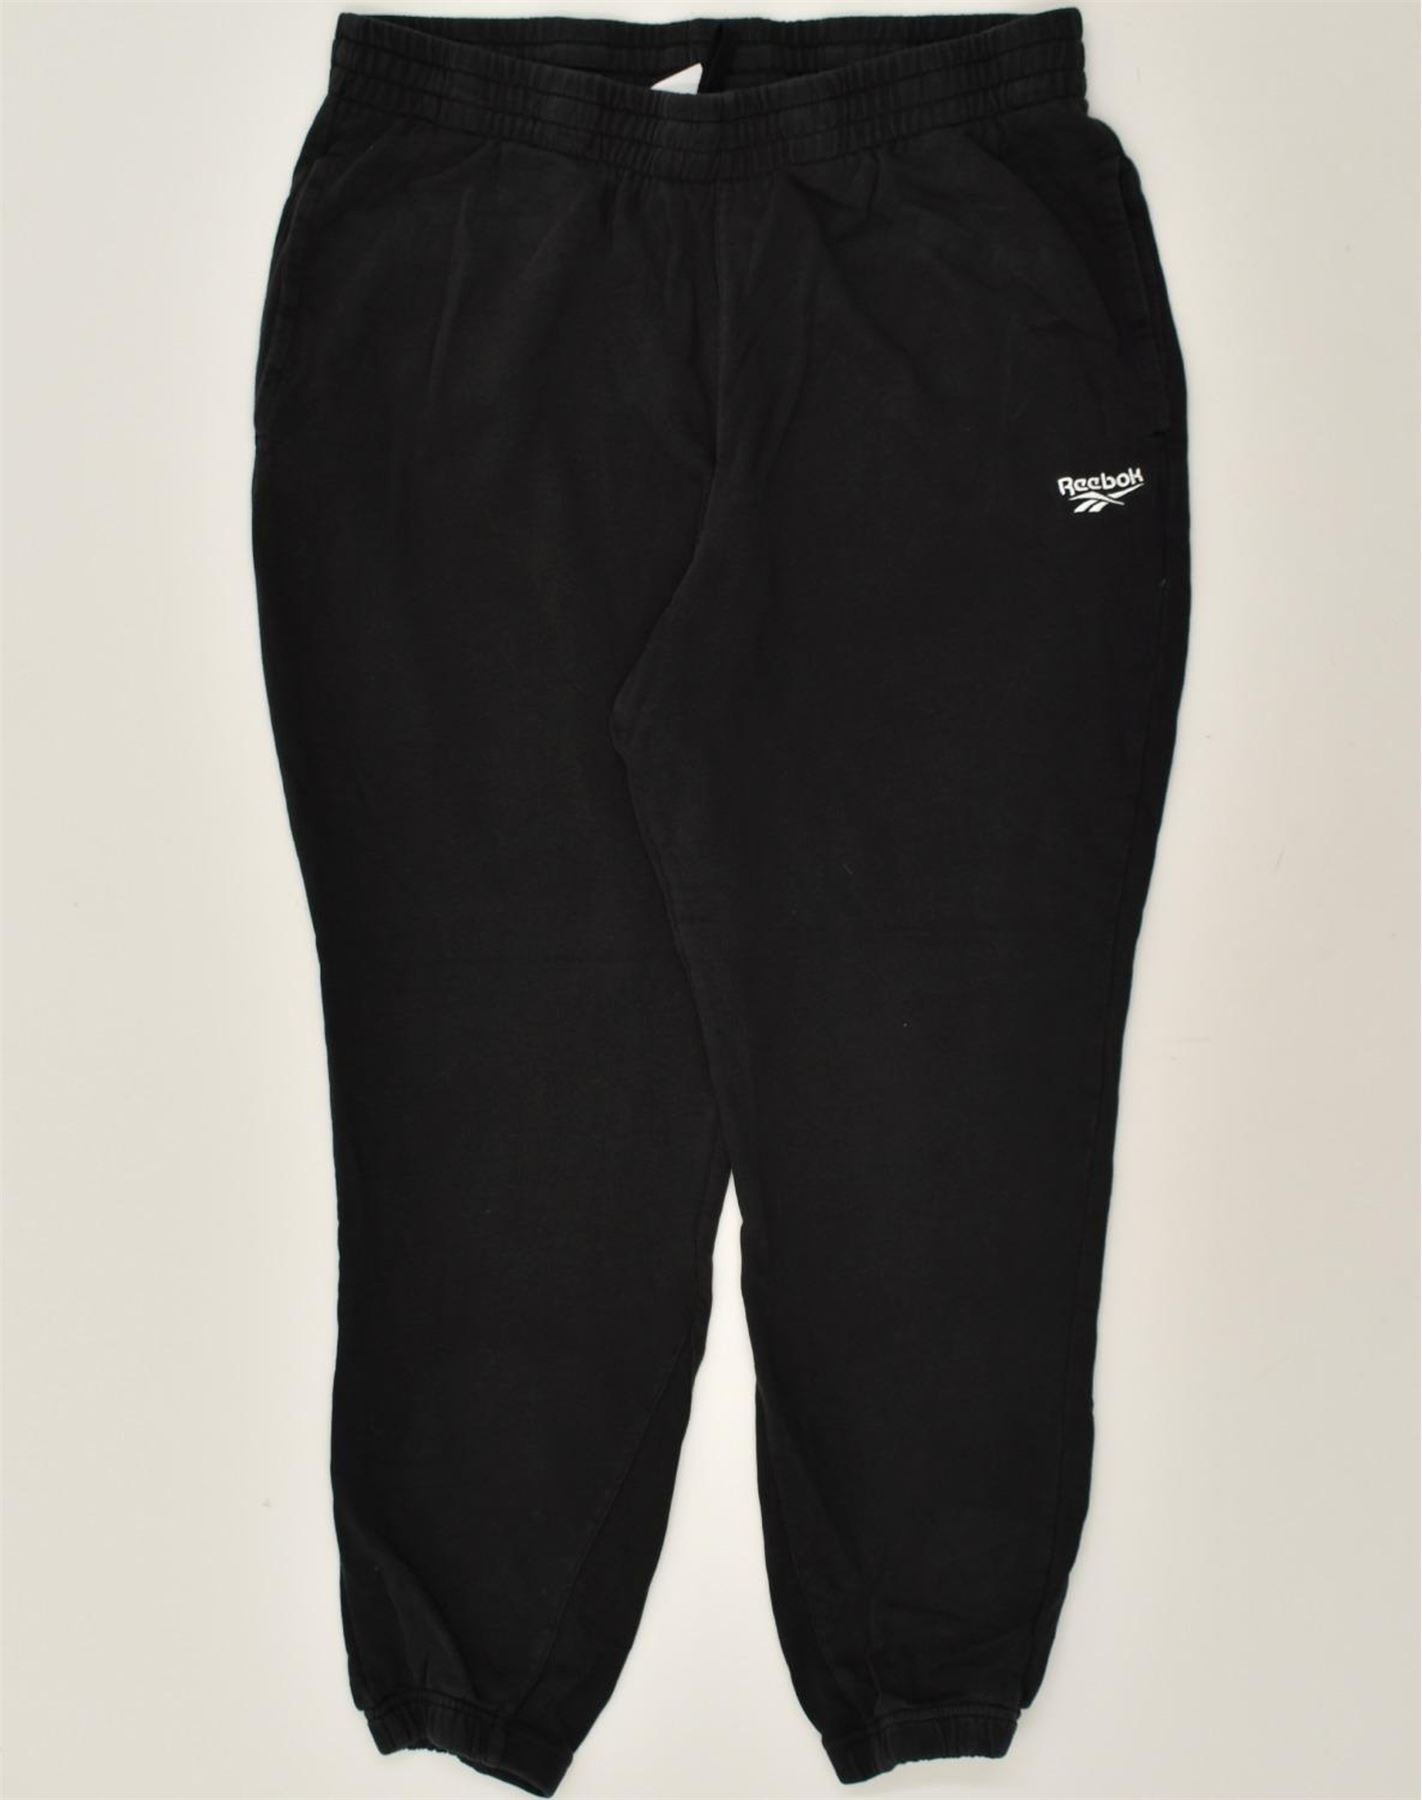 Buy Reebok Formal Trousers & Hight Waist Pants online - Men - 1 products |  FASHIOLA.in